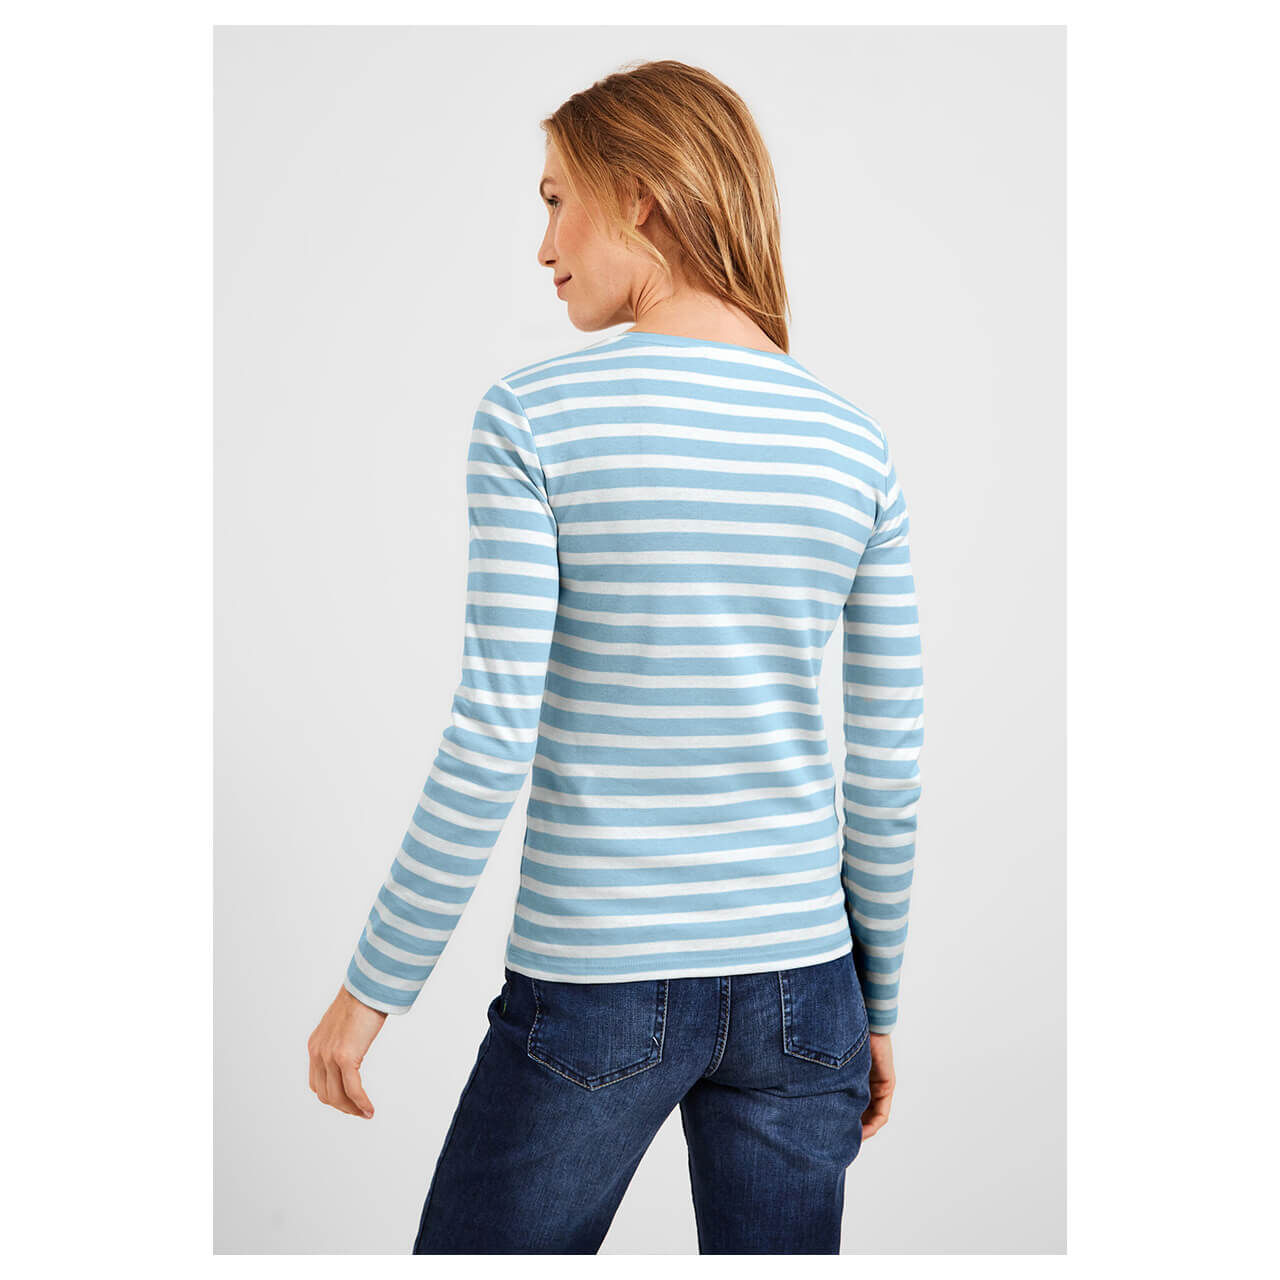 Cecil Pia Langarm Shirt faded blue stripes